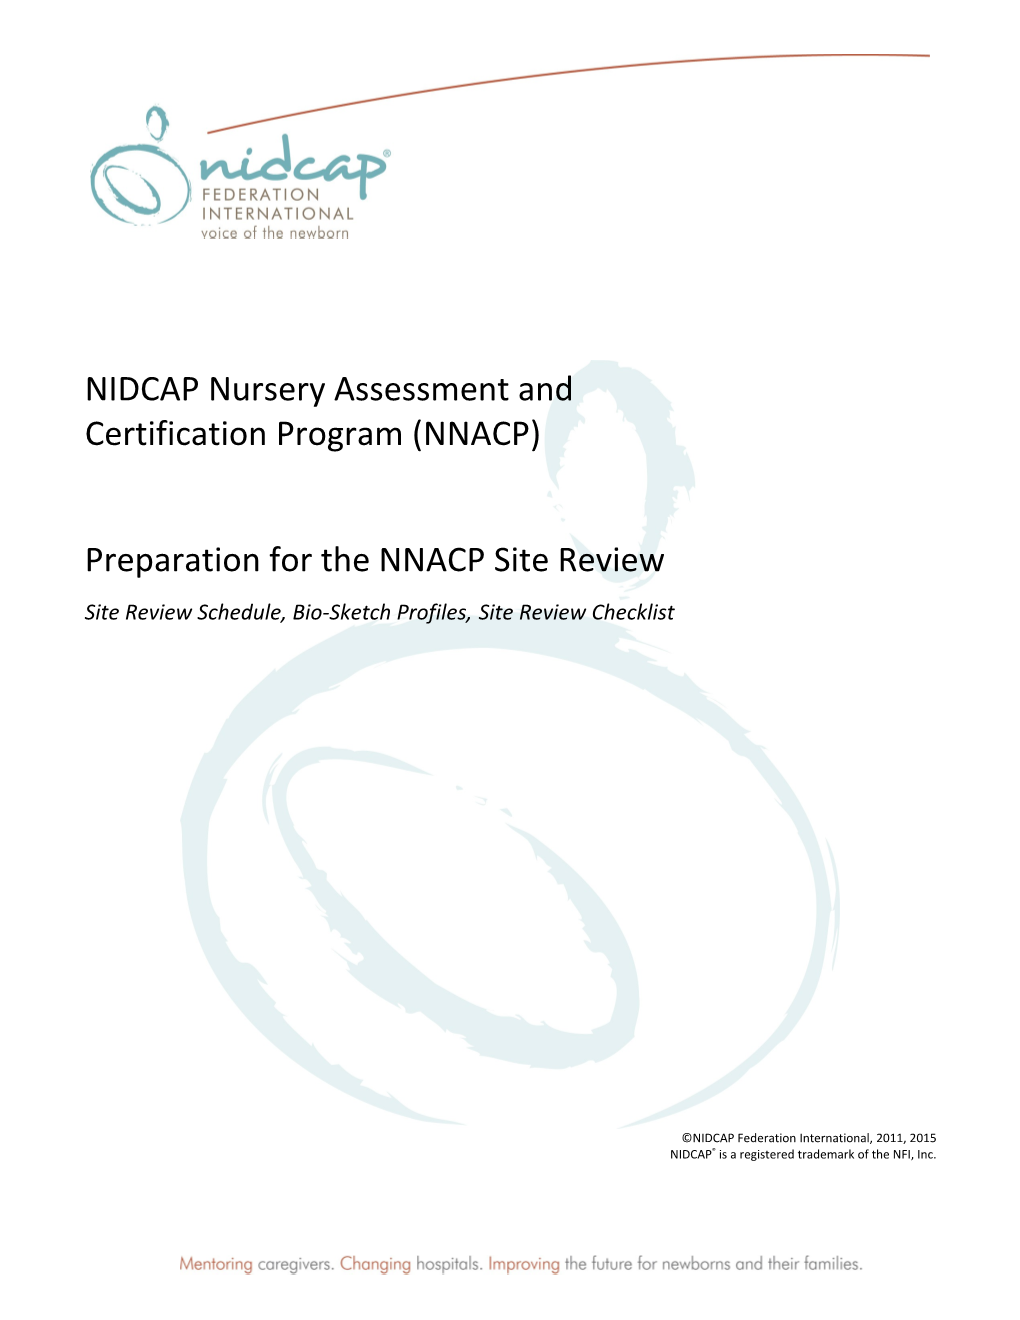 NIDCAP Nursery Certification Program (NNCP) Site Review s1